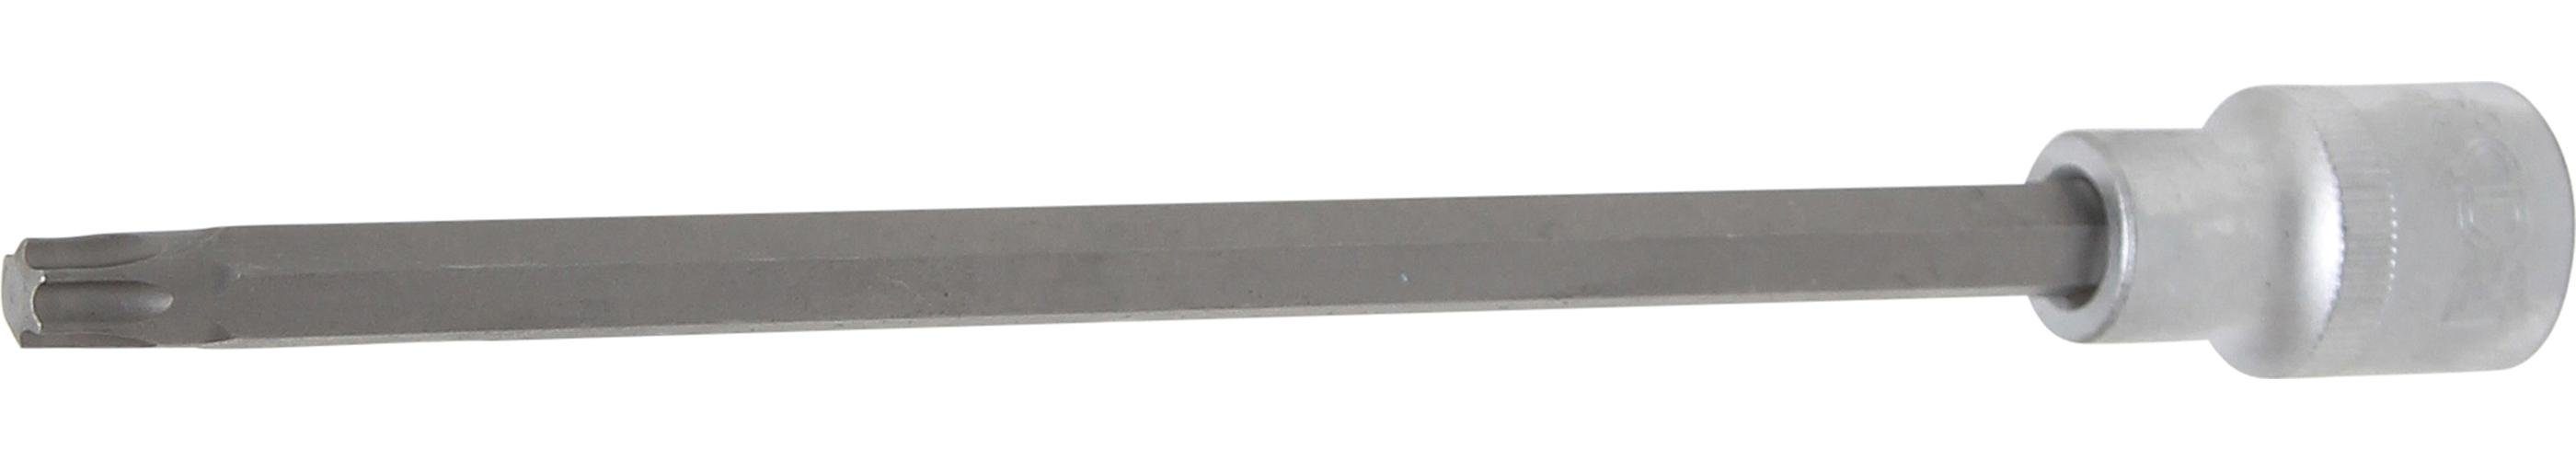 BGS technic Bit-Schraubendreher Bit-Einsatz, Länge 200 mm, Antrieb Innenvierkant 12,5 mm (1/2), T-Profil (für Torx) T45